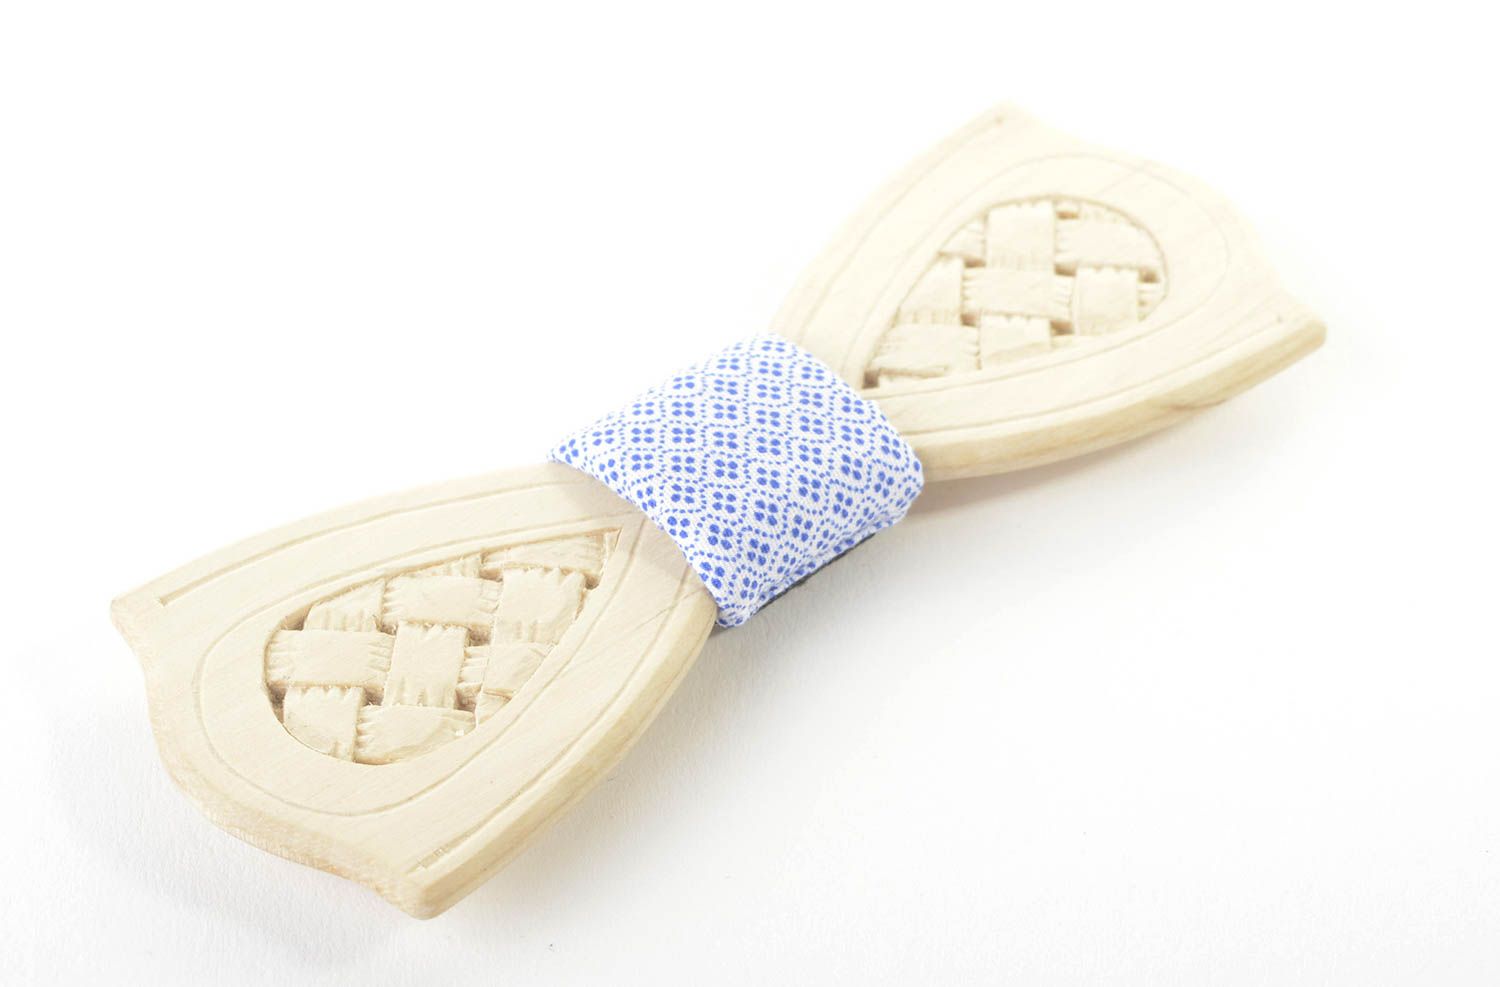 Handmade accessories for men wooden bow tie gift ideas for boyfriend wooden gift photo 1